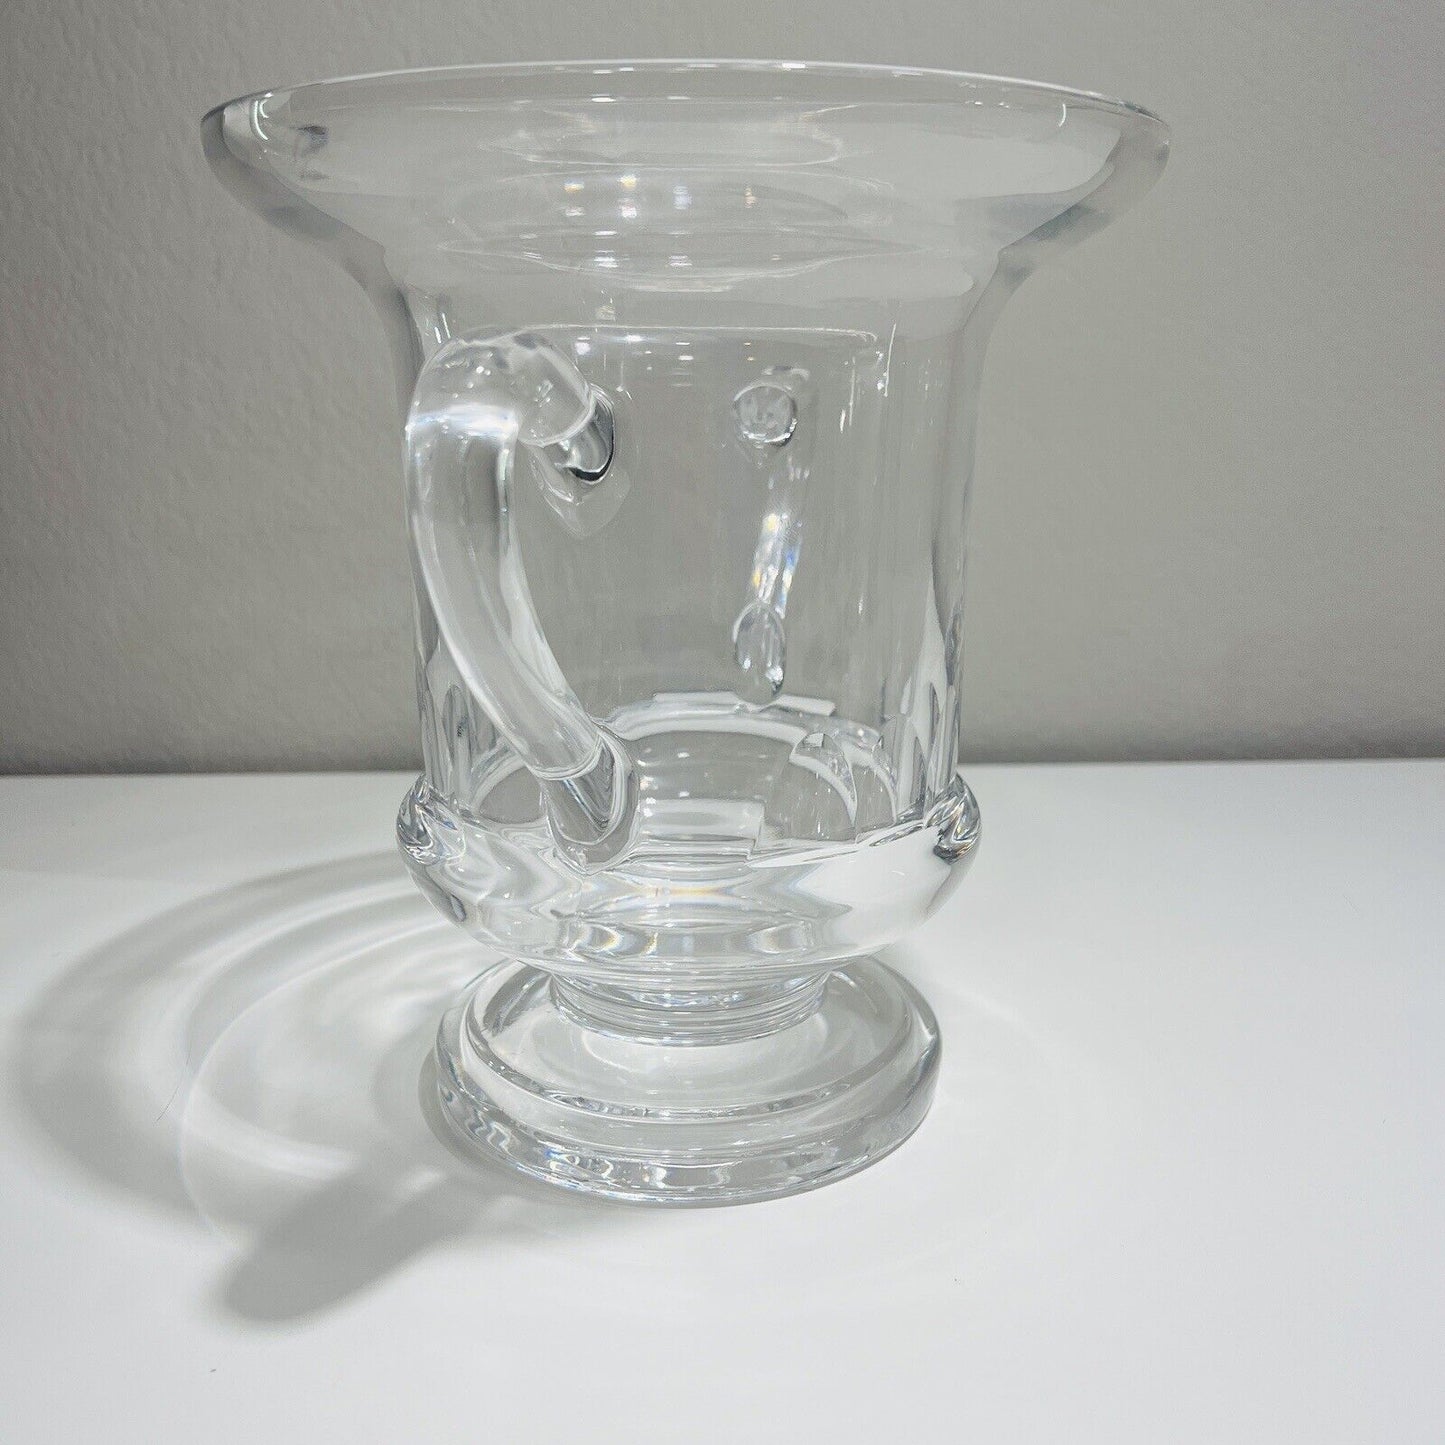 Mario Cioni Vase Large Pedestal Crystal Double Handle Glass Italy Urn Lead